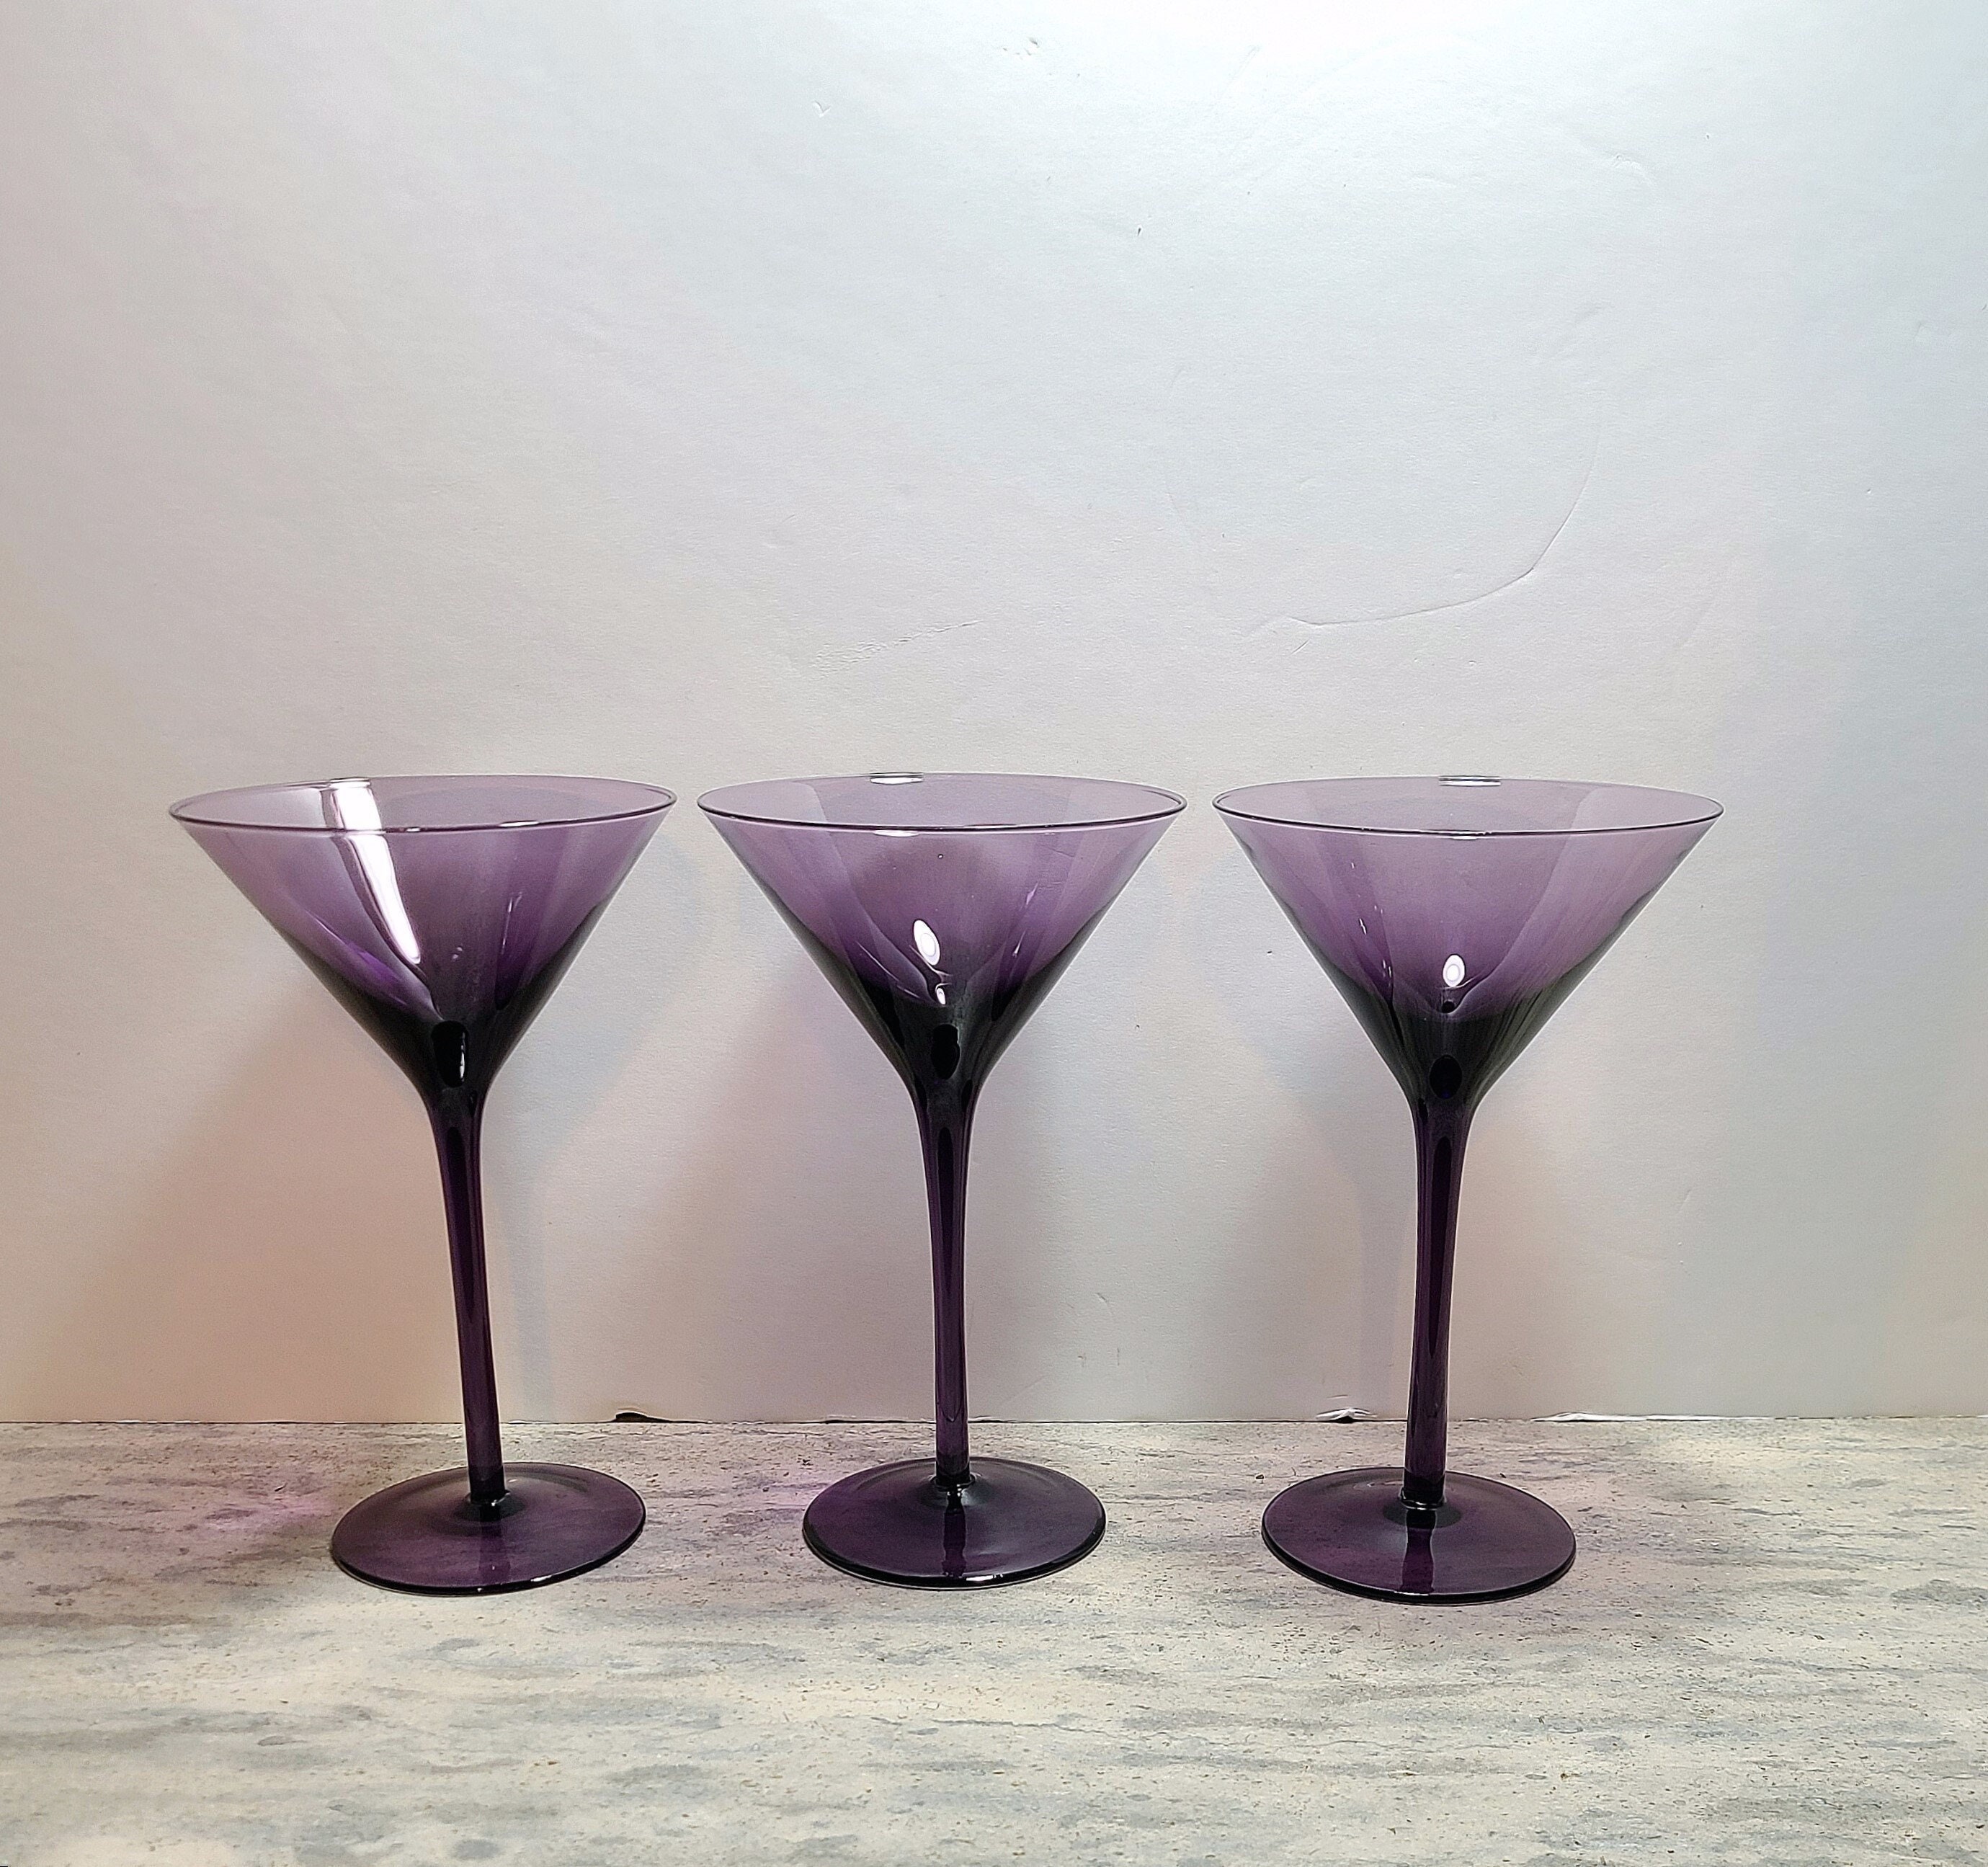 3 oz. Libbey®Mini Martini Shot Glasses